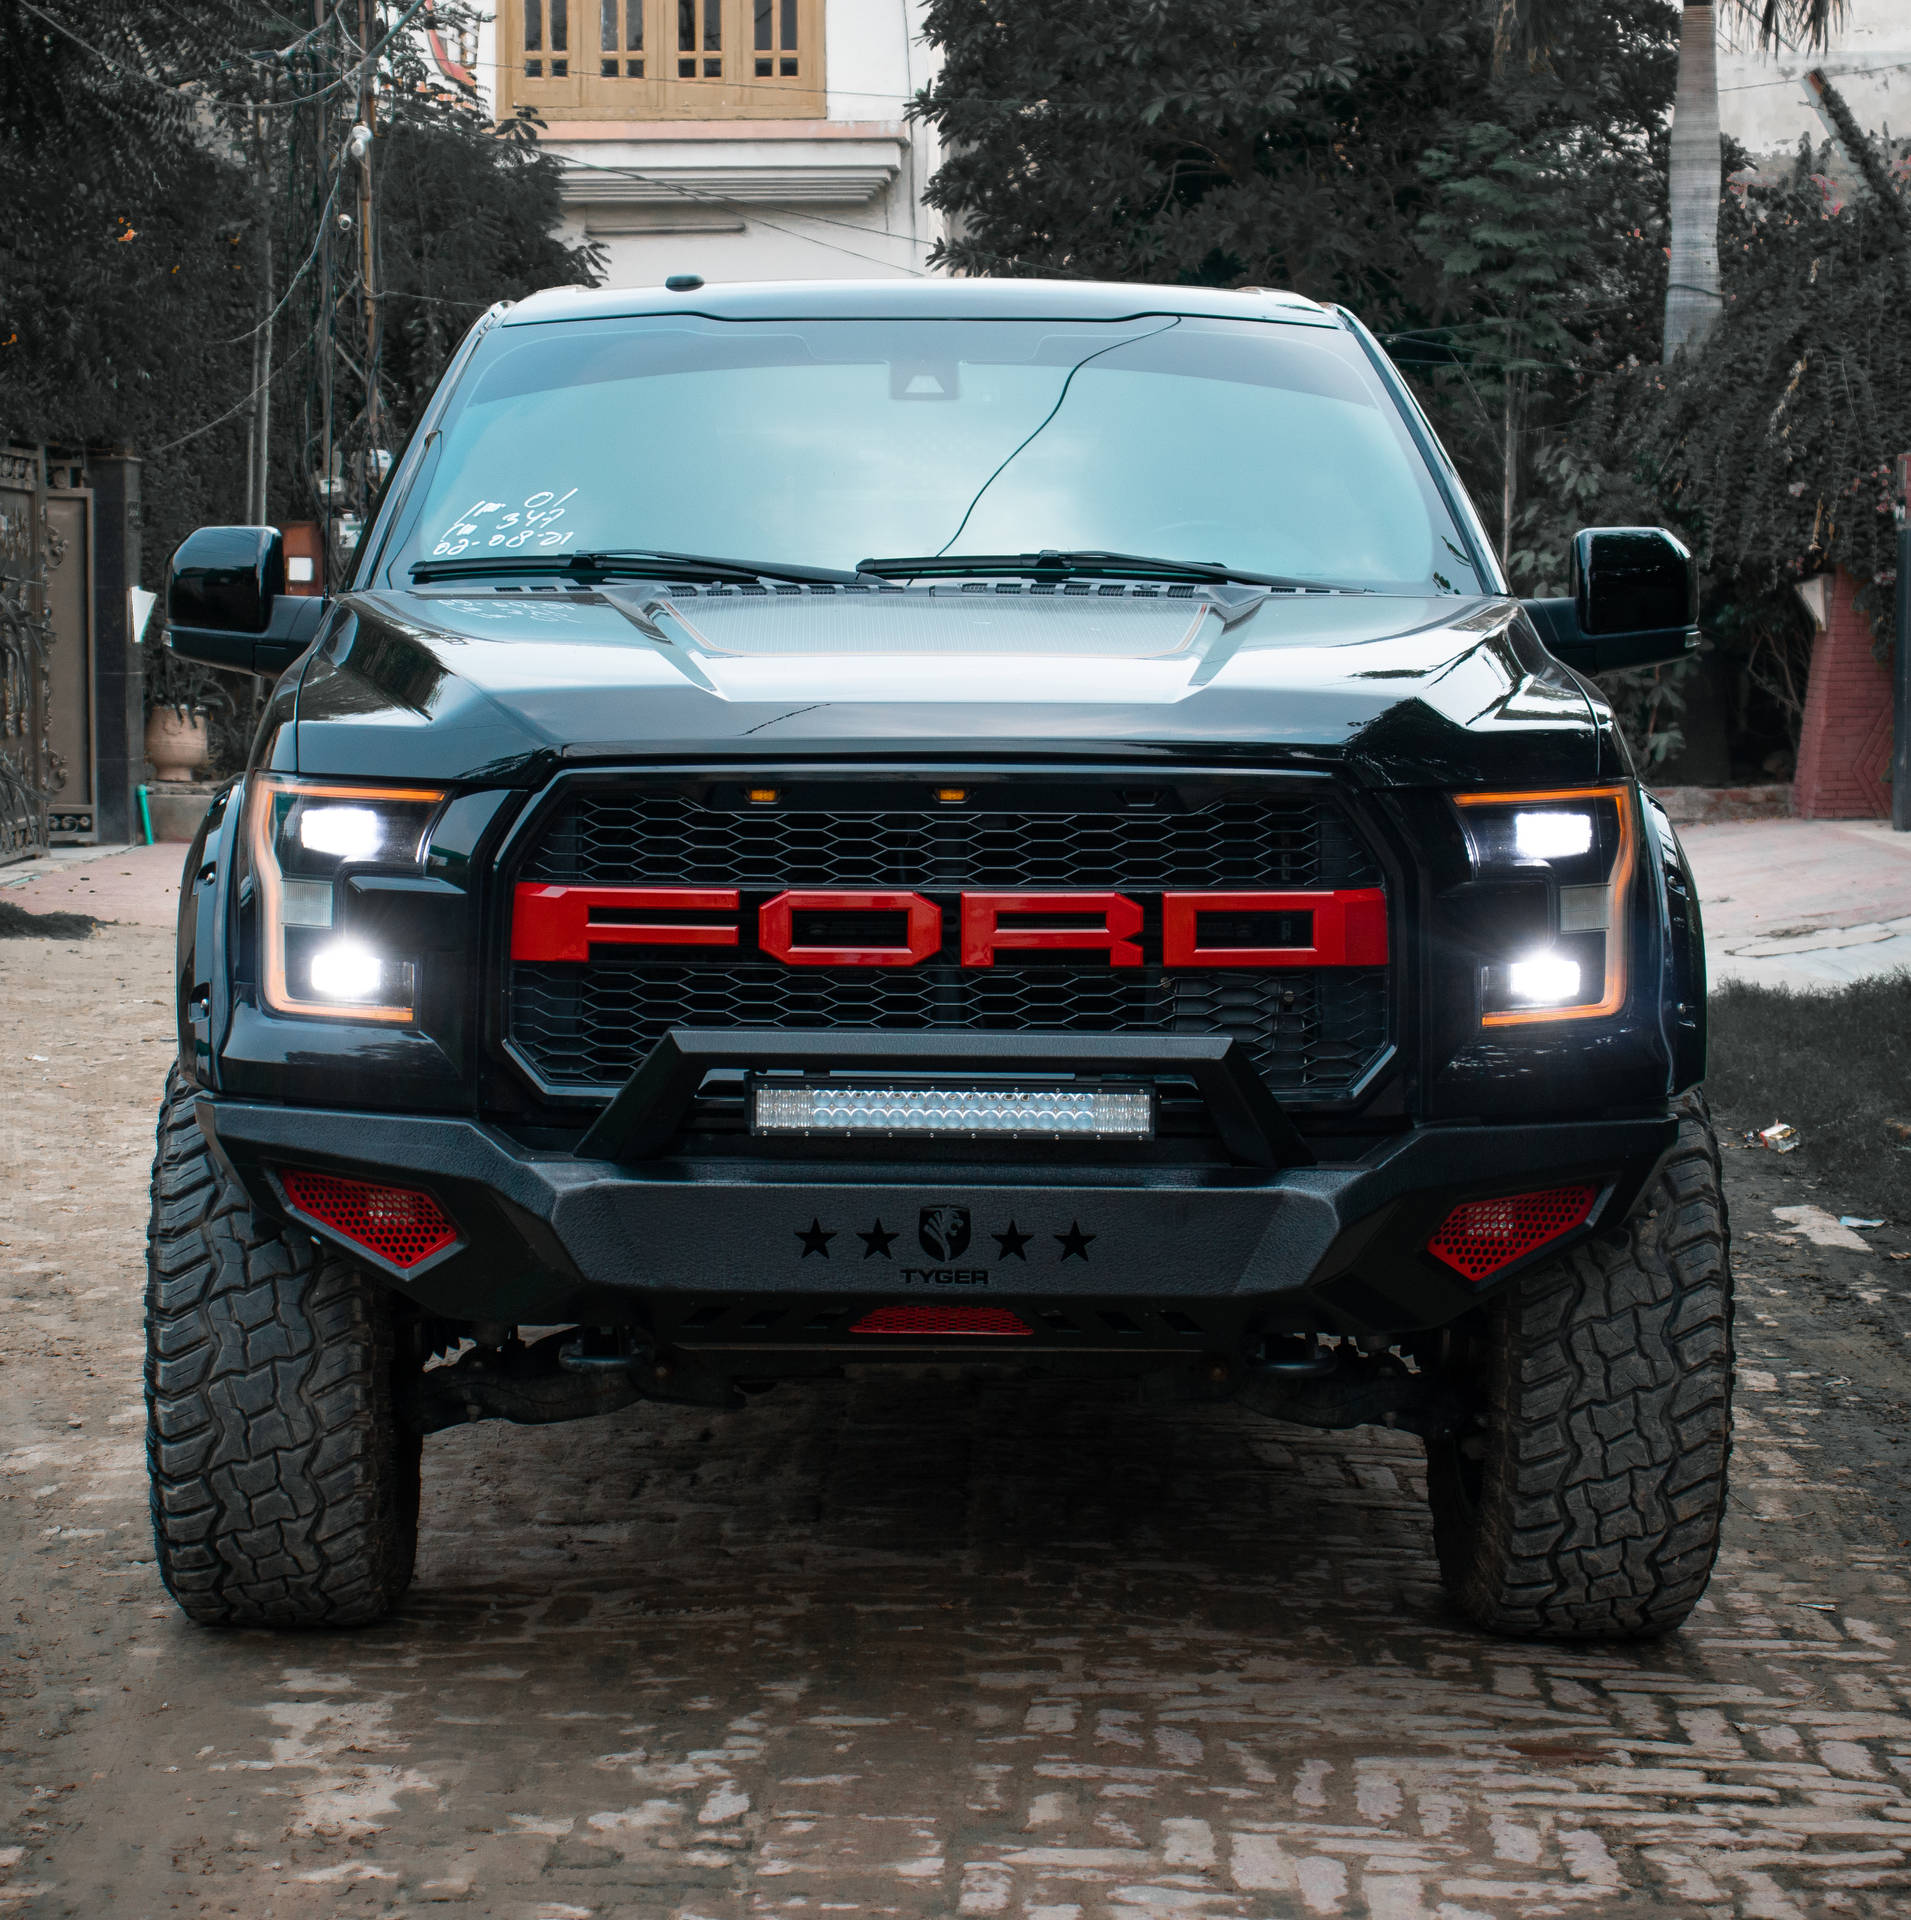 Ford Raptor In Glossy Black Color